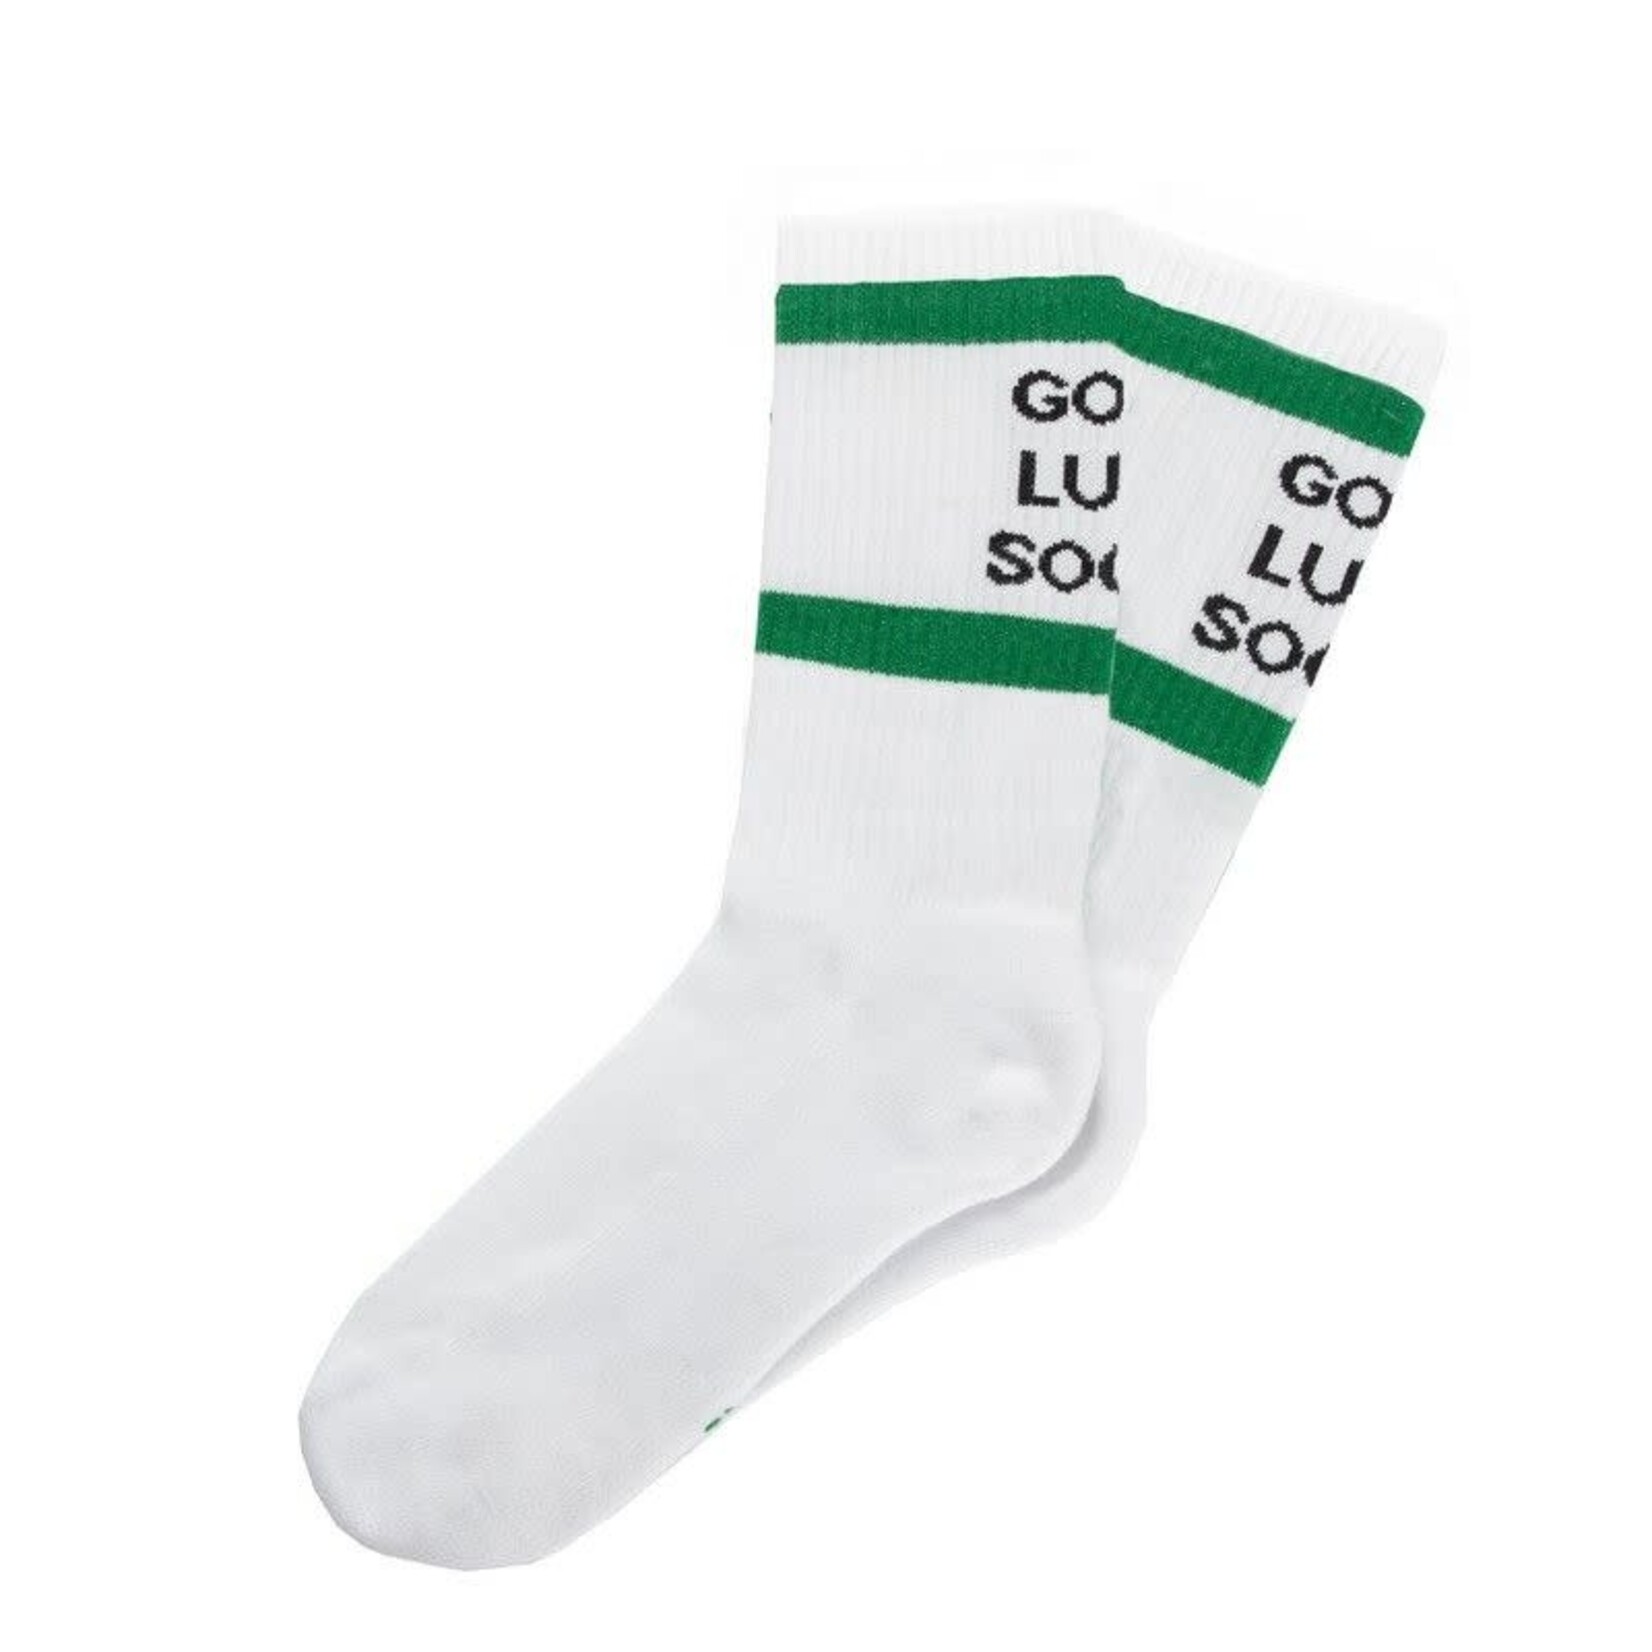 Sock a pair 'Good luck socks'